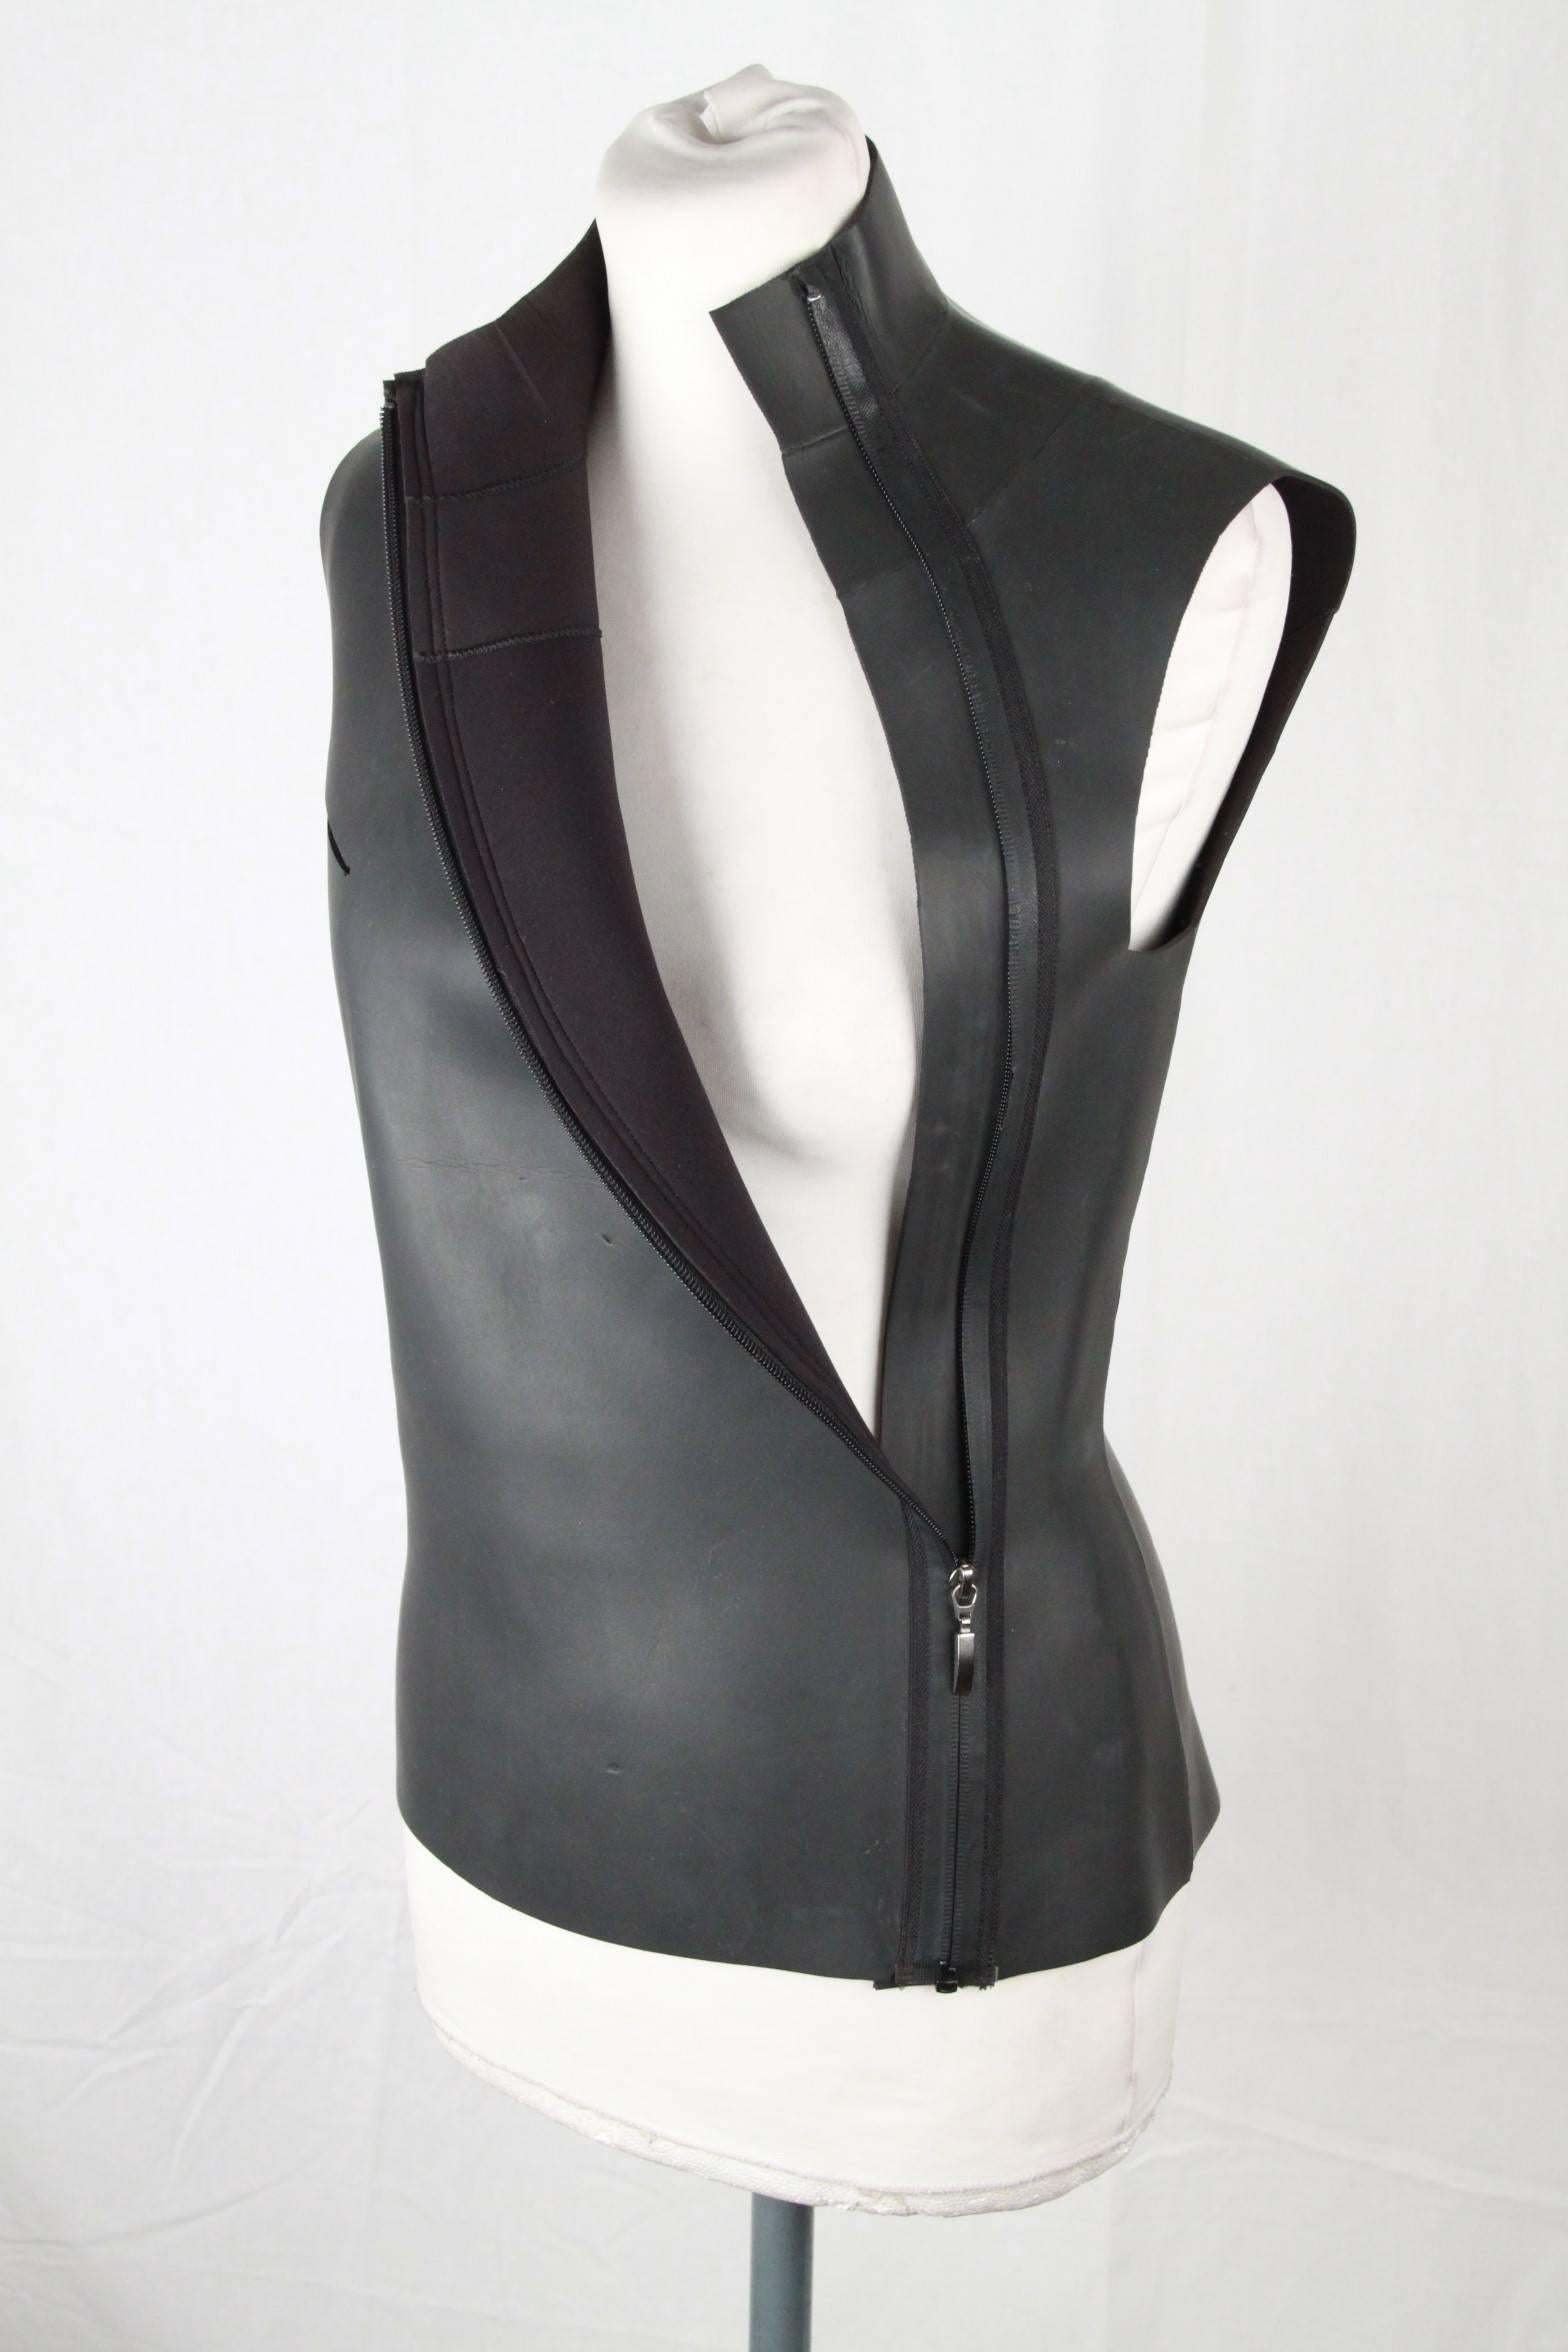 Jean Paul Gaultier Black Neoprene Vest Sleeveless Top Size 42 5